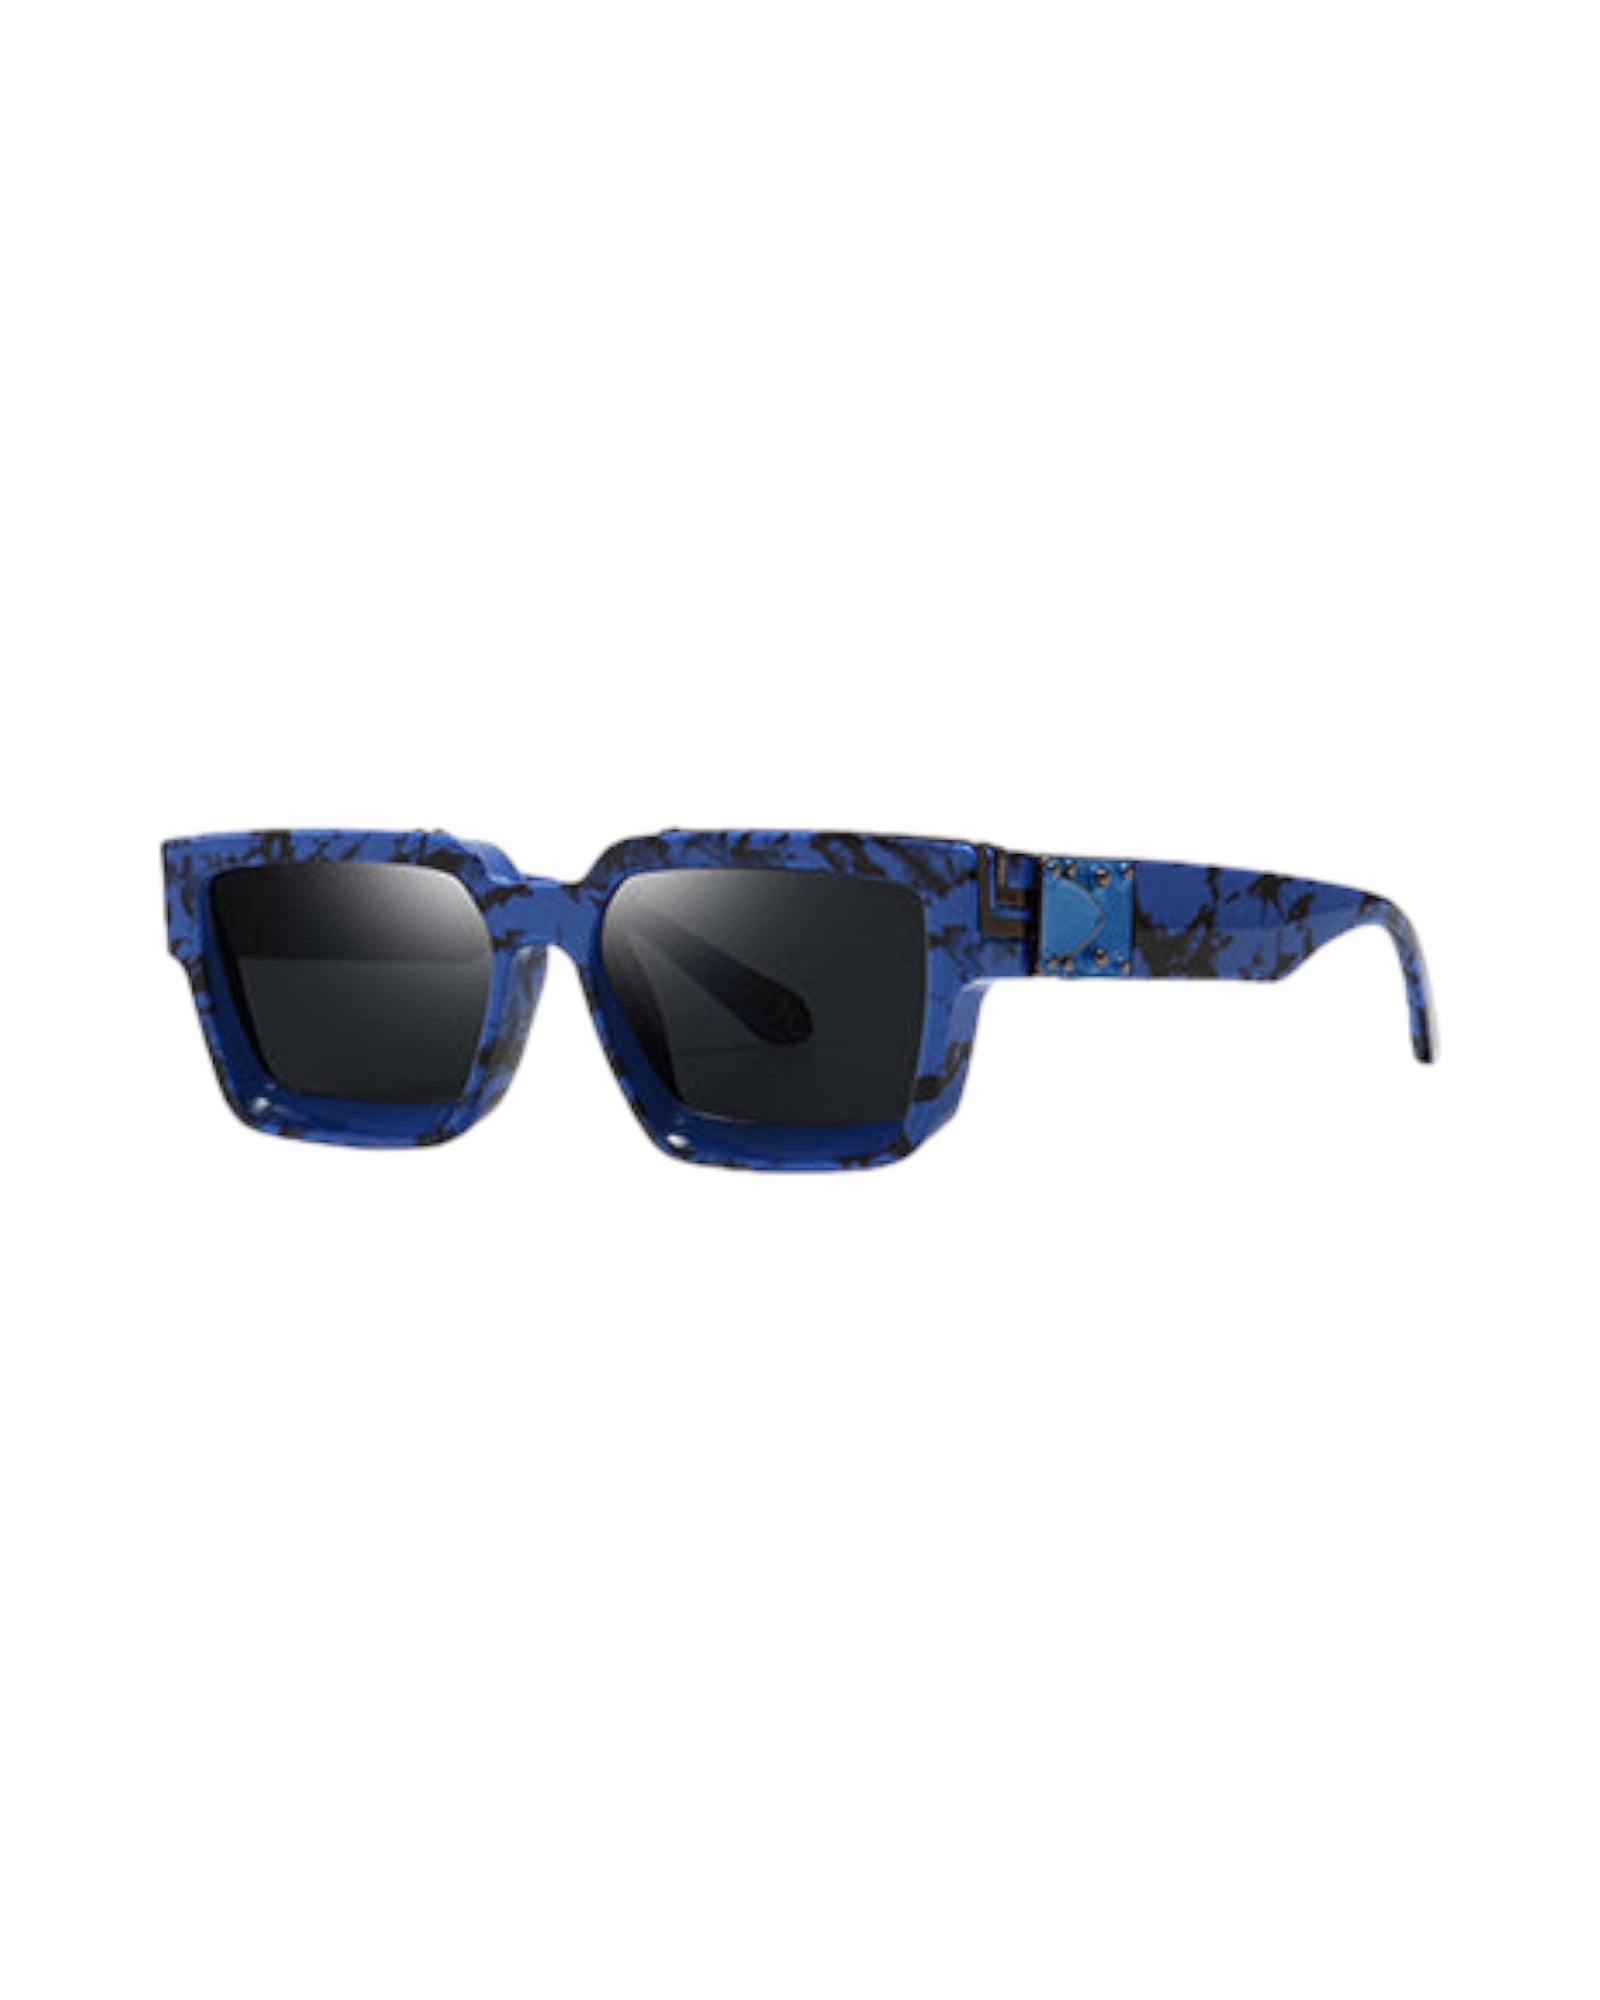 AUSTIN rectangular square sunglasses eyewear shades retro blue frame black lens festival fashion